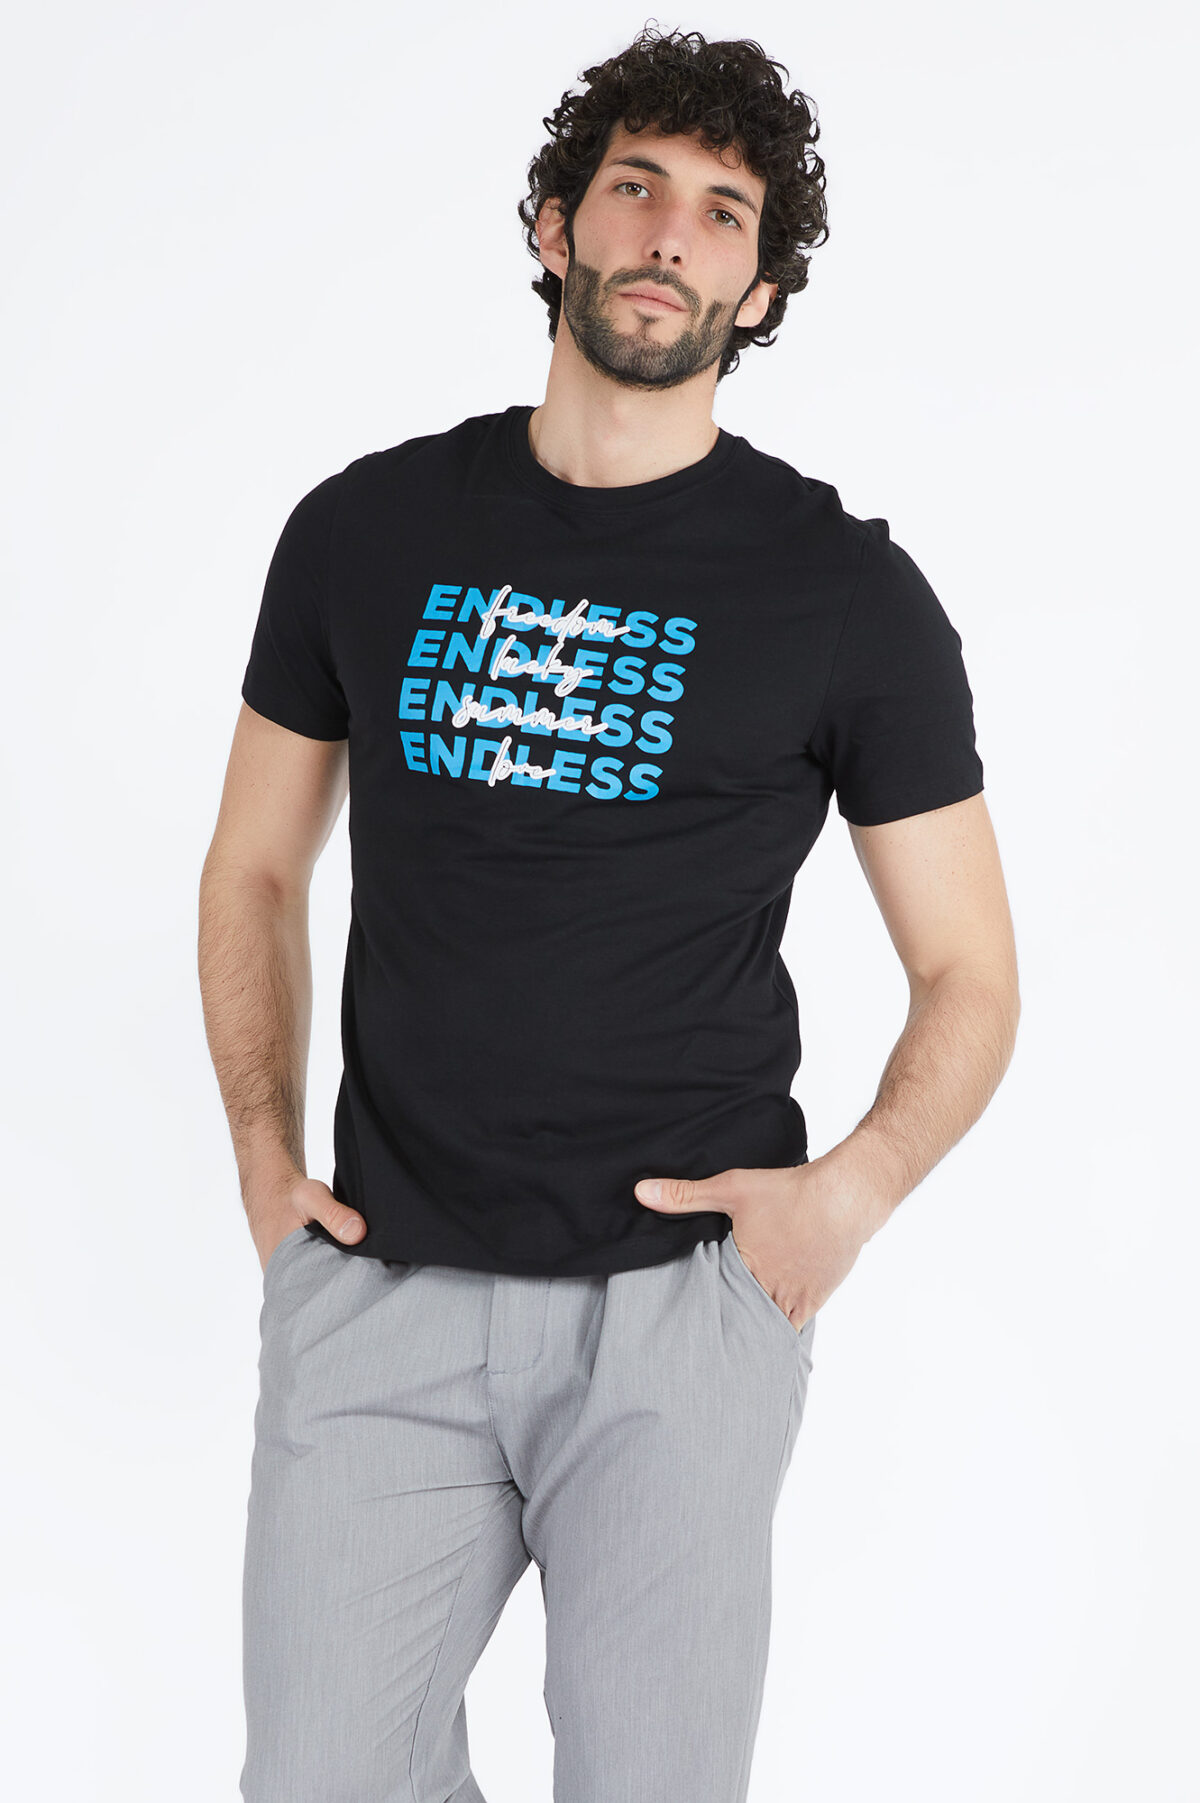 T-shirt ENDLESS